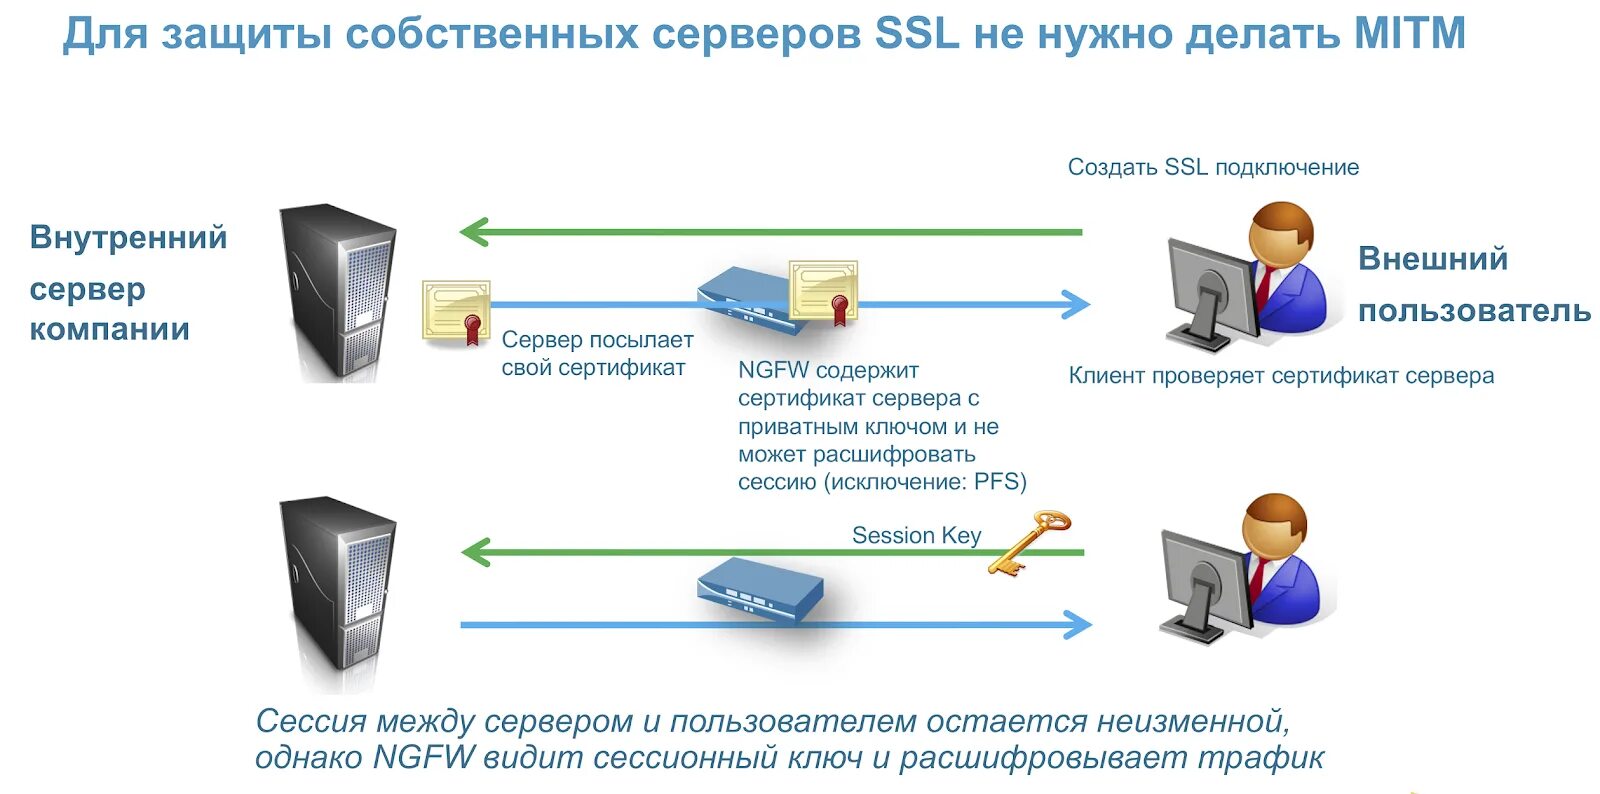 TLS сертификат. Как работает SSL сертификат. Сертификат на сервер. Центры сертификации SSL.